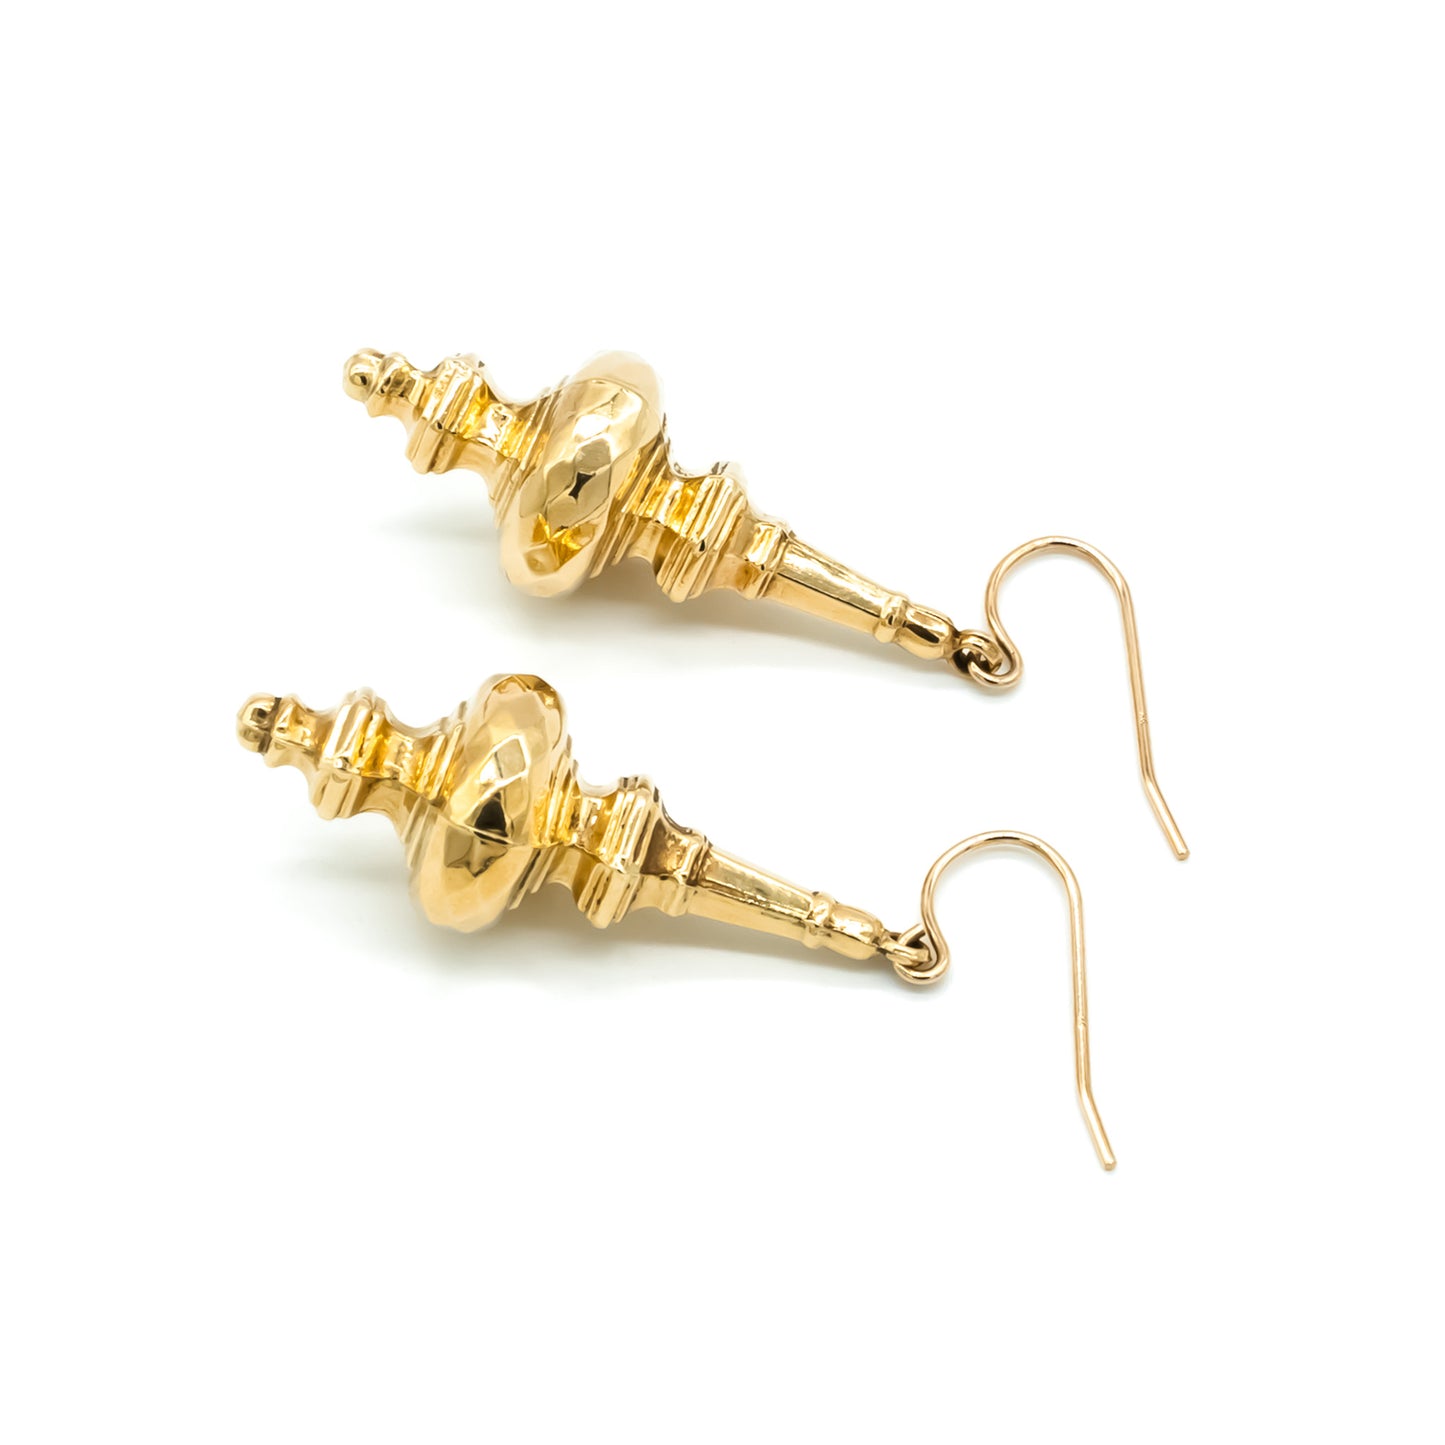 Stylish Victorian 9ct yellow gold drop earrings.